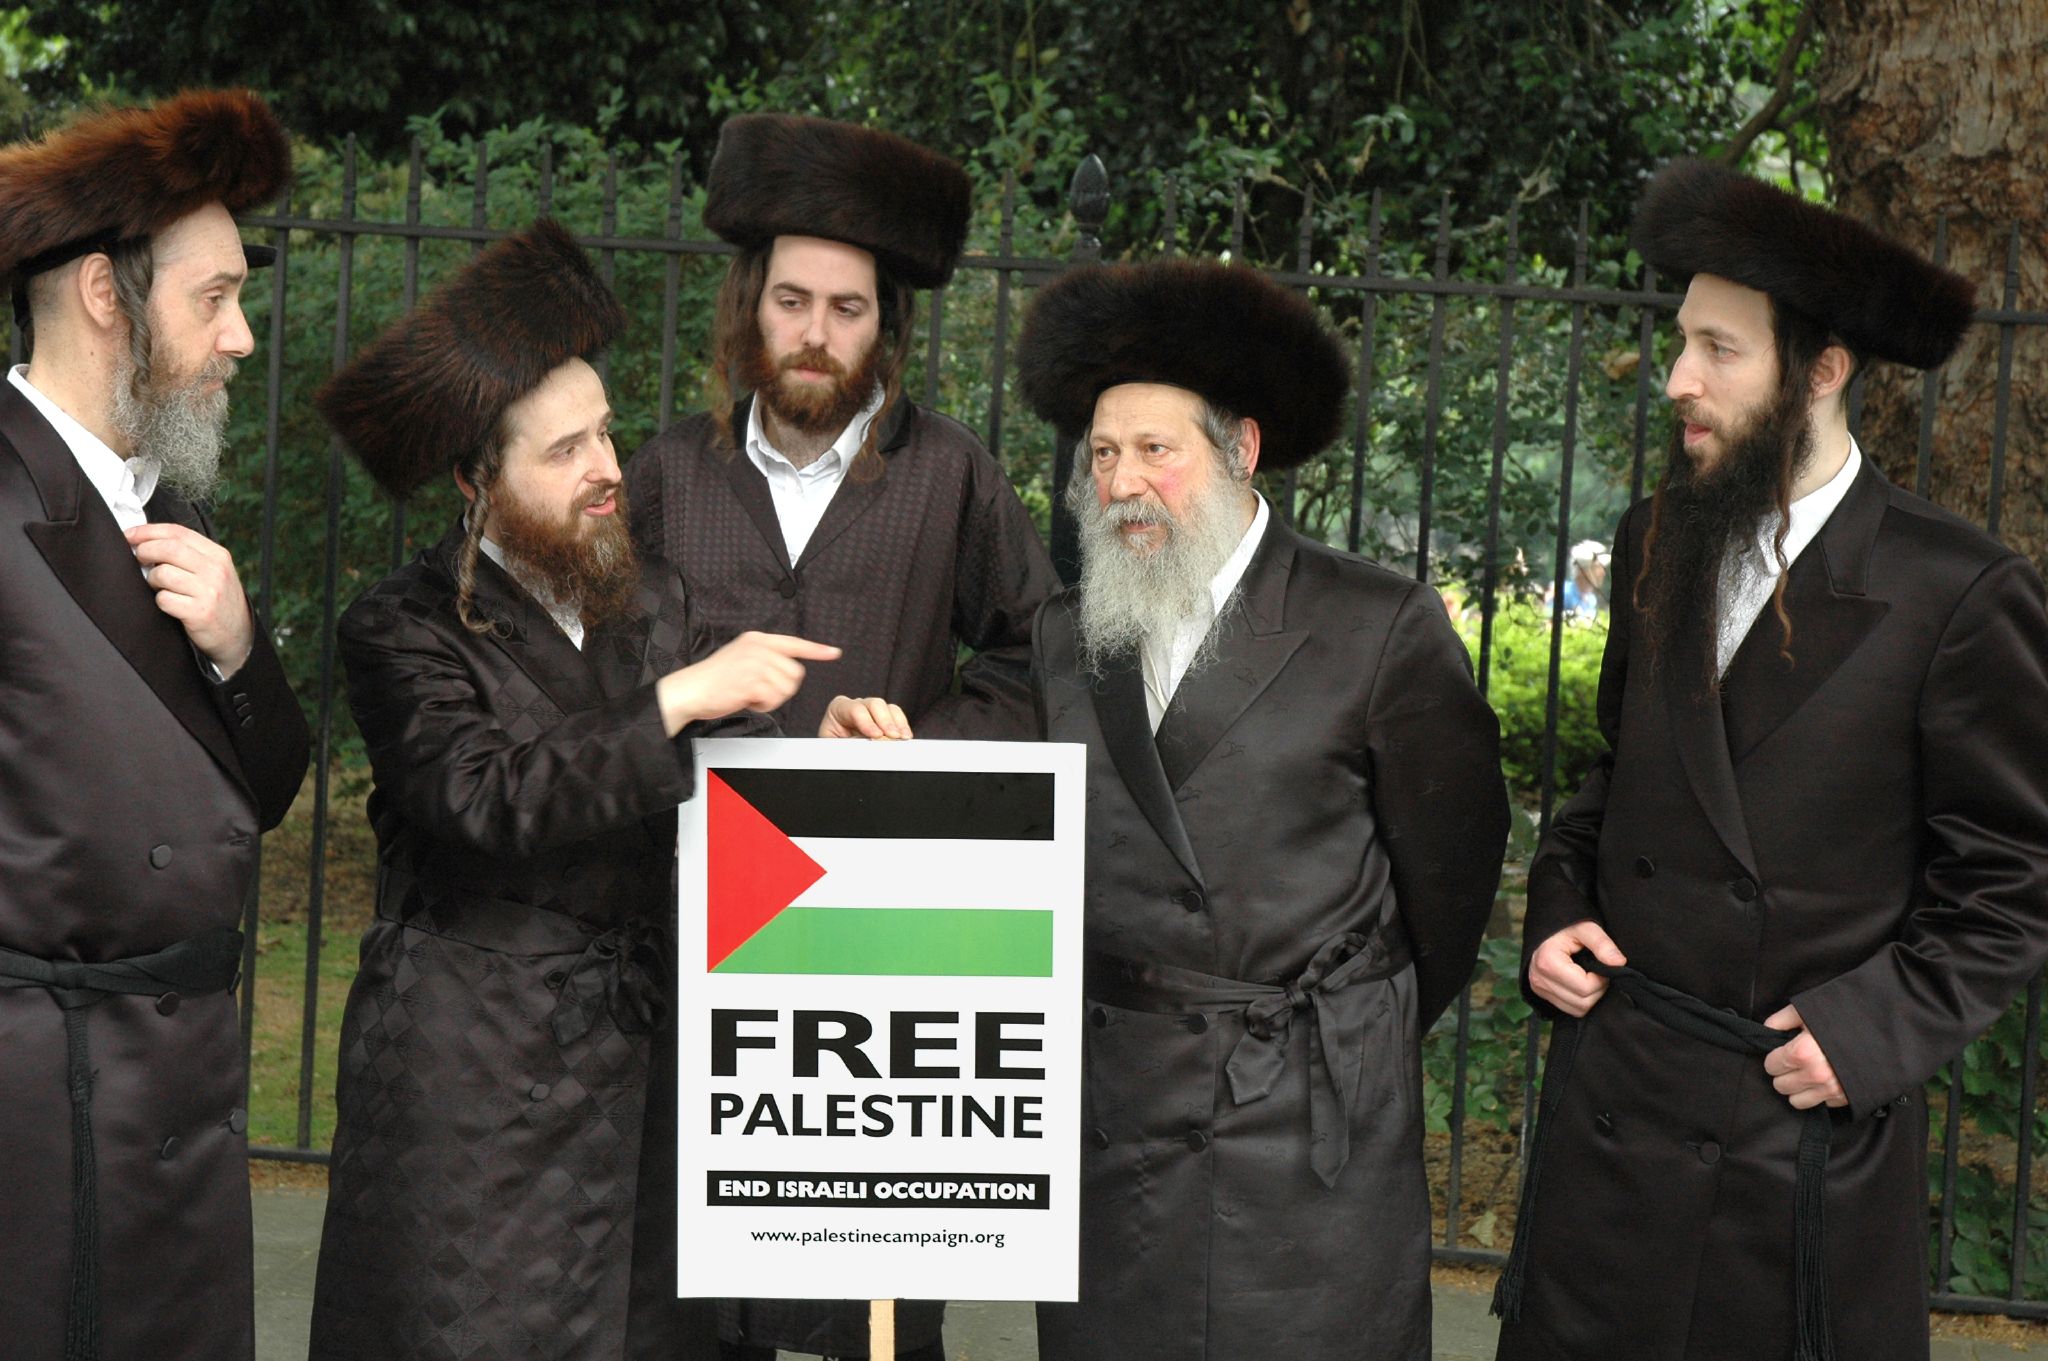 http://upload.wikimedia.org/wikipedia/commons/8/86/Members_of_Neturei_Karta_Orthodox_Jewish_group_protest_against_Israel.jpg